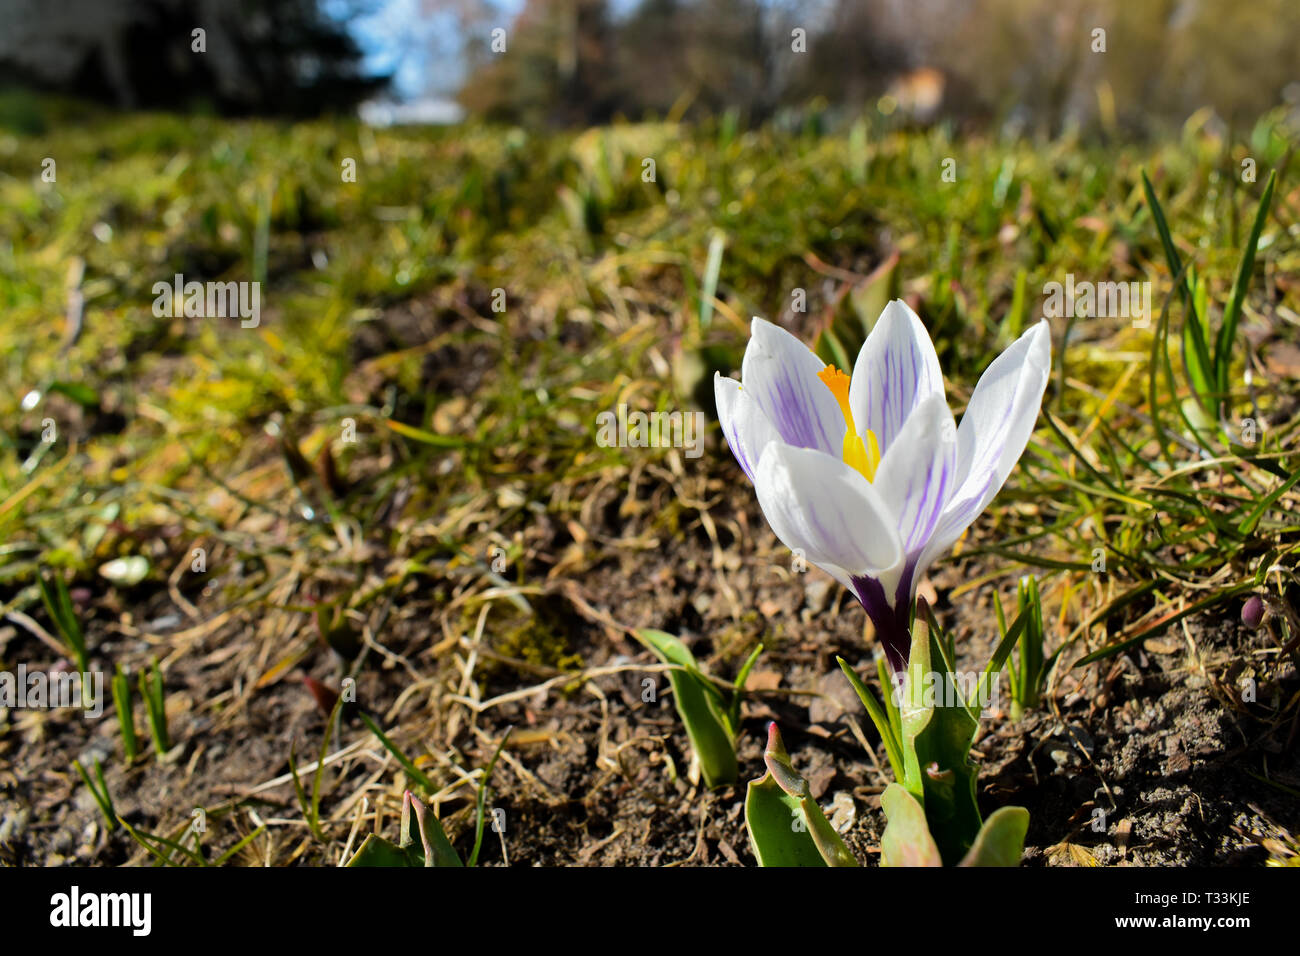 White crocus flower. Stock Photo